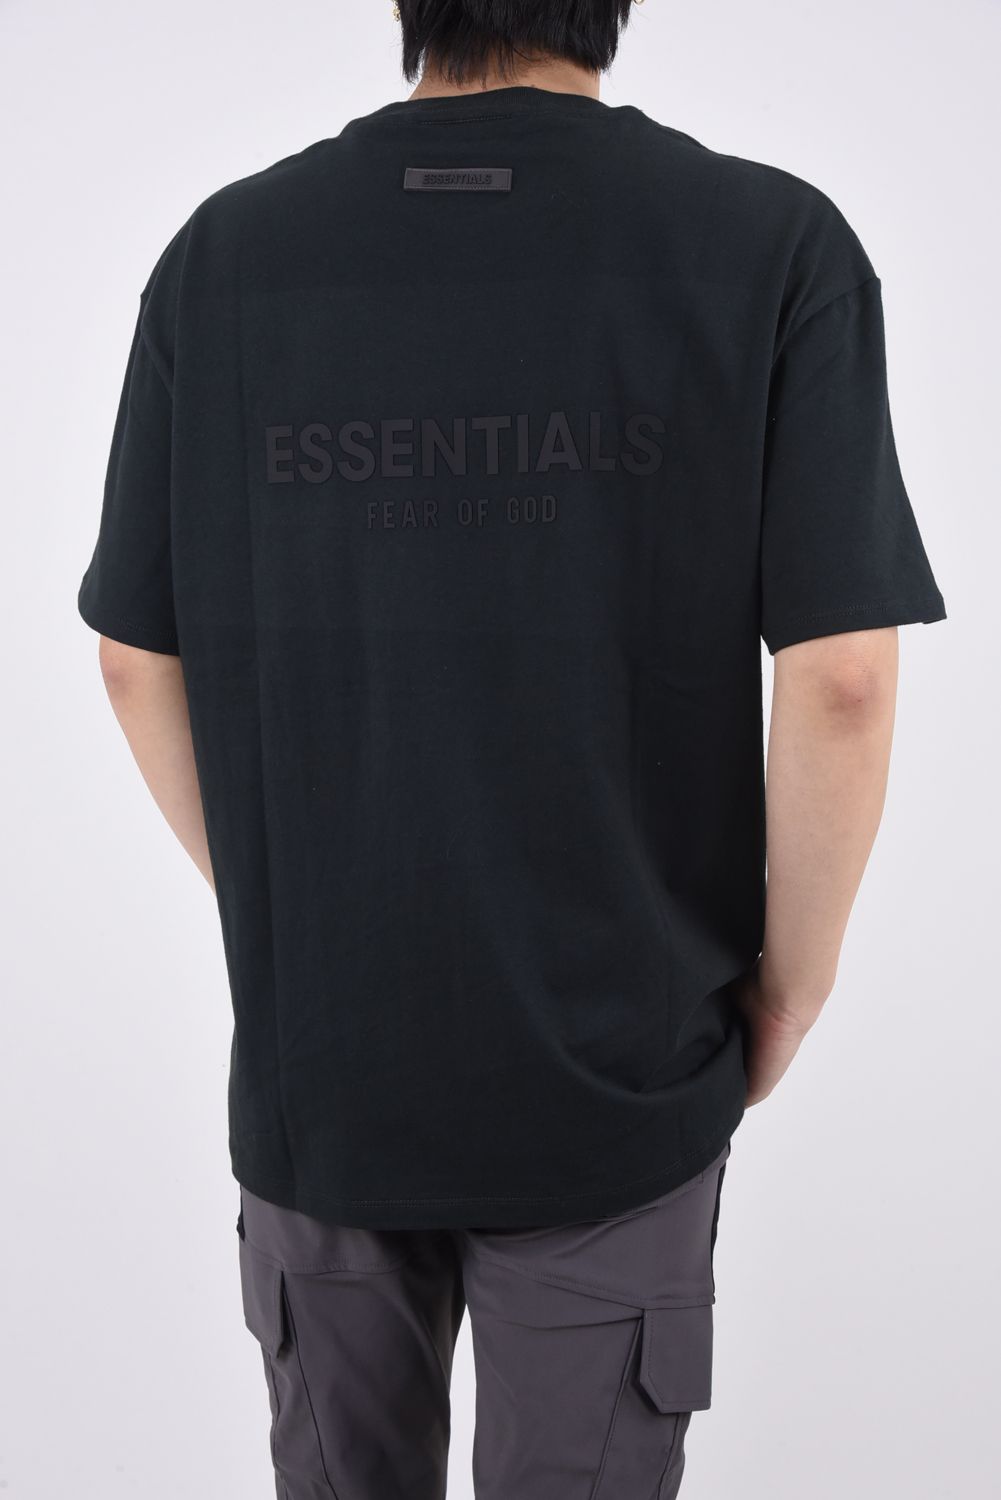 FOG ESSENTIALS - ESSENTIALS BACK LOGO T-Shirt / バック ロゴ